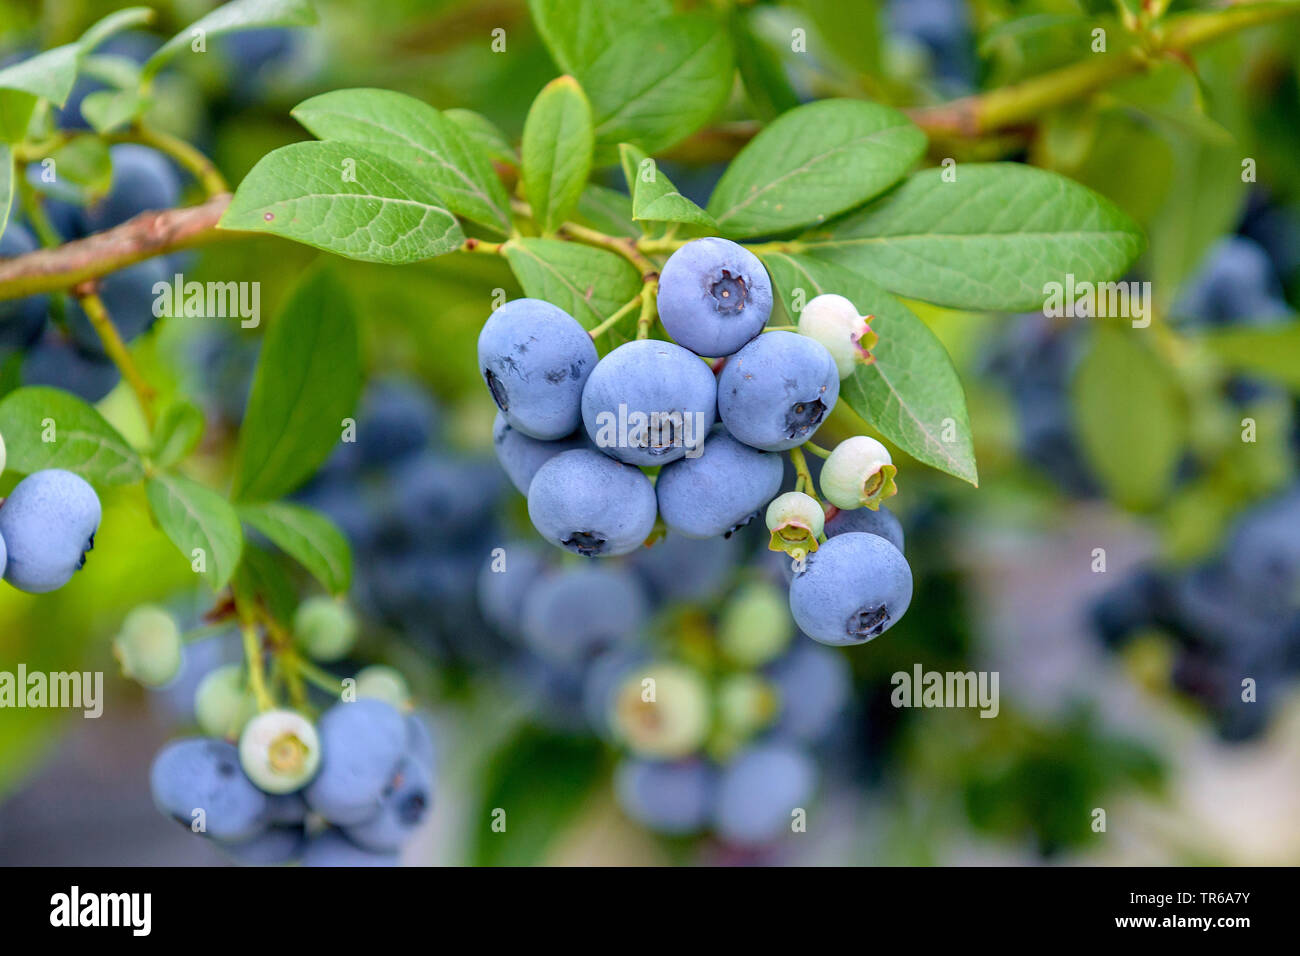 Hohe Blueberry, Amerikanische Blaubeere, blueberry Sumpf (Vaccinium corymbosum 'Bluecrop', Vaccinium corymbosum Bluecrop), Beeren der Sorte Bluecrop Stockfoto